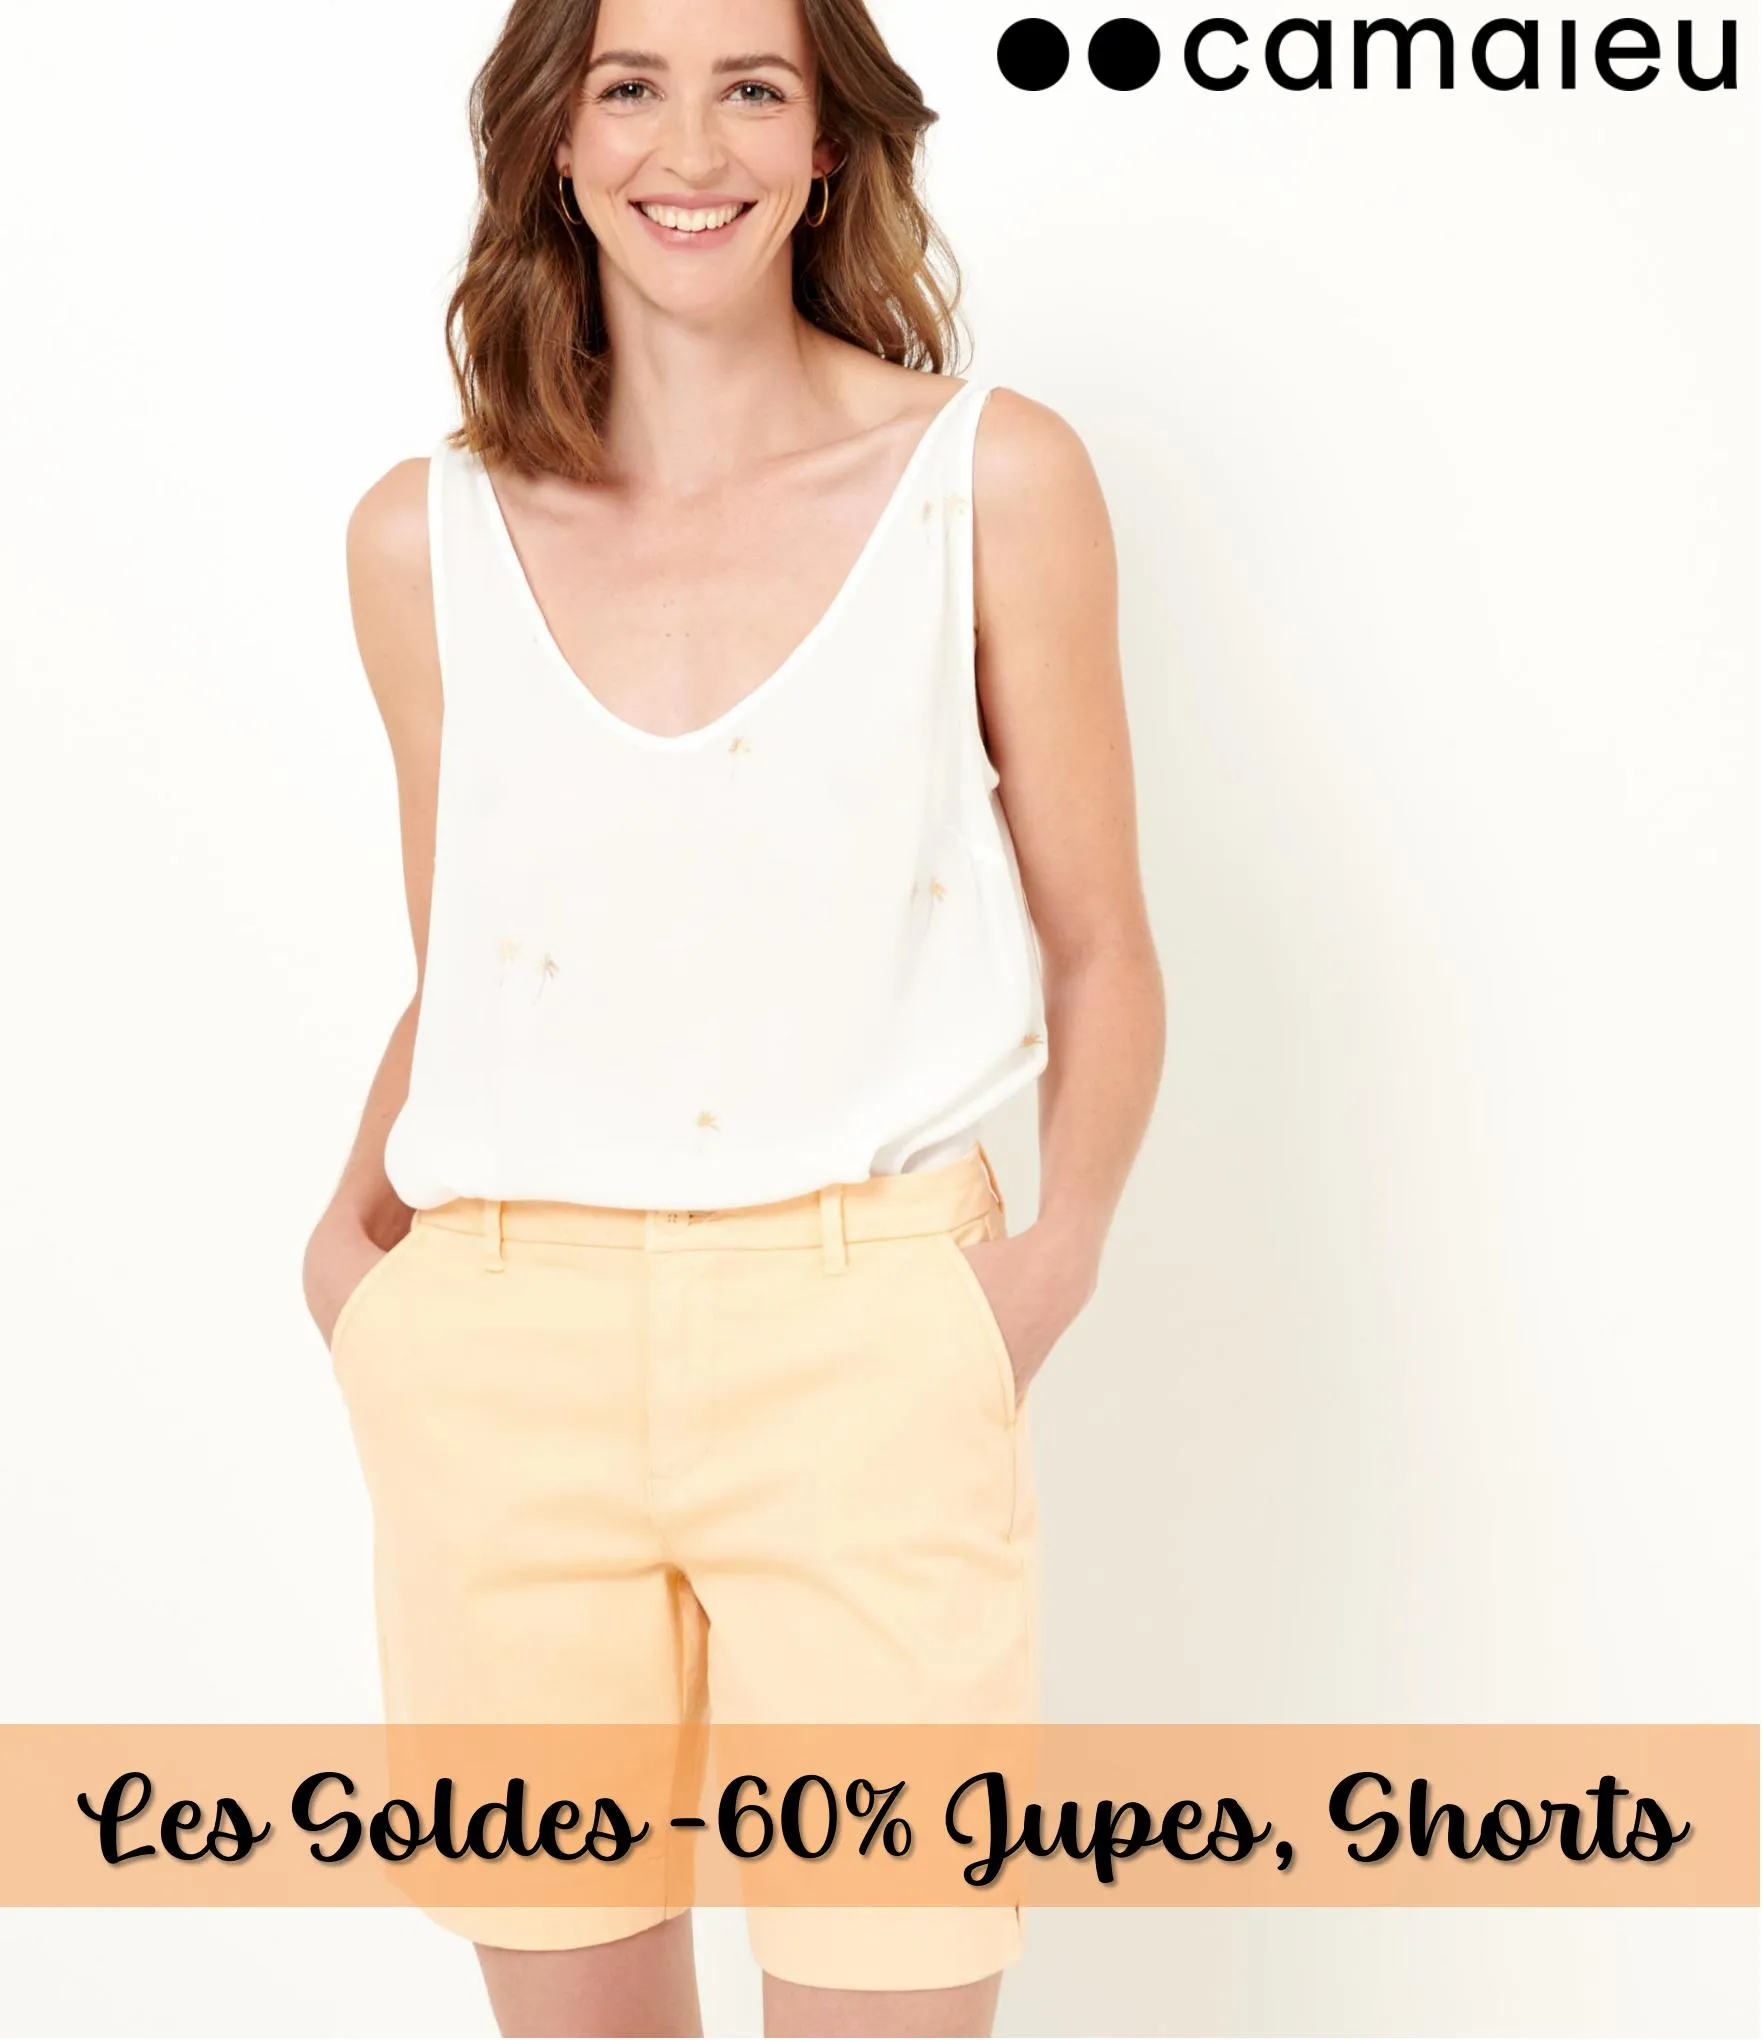 Catalogue Les Soldes -60% Jupes, Shorts, page 00001